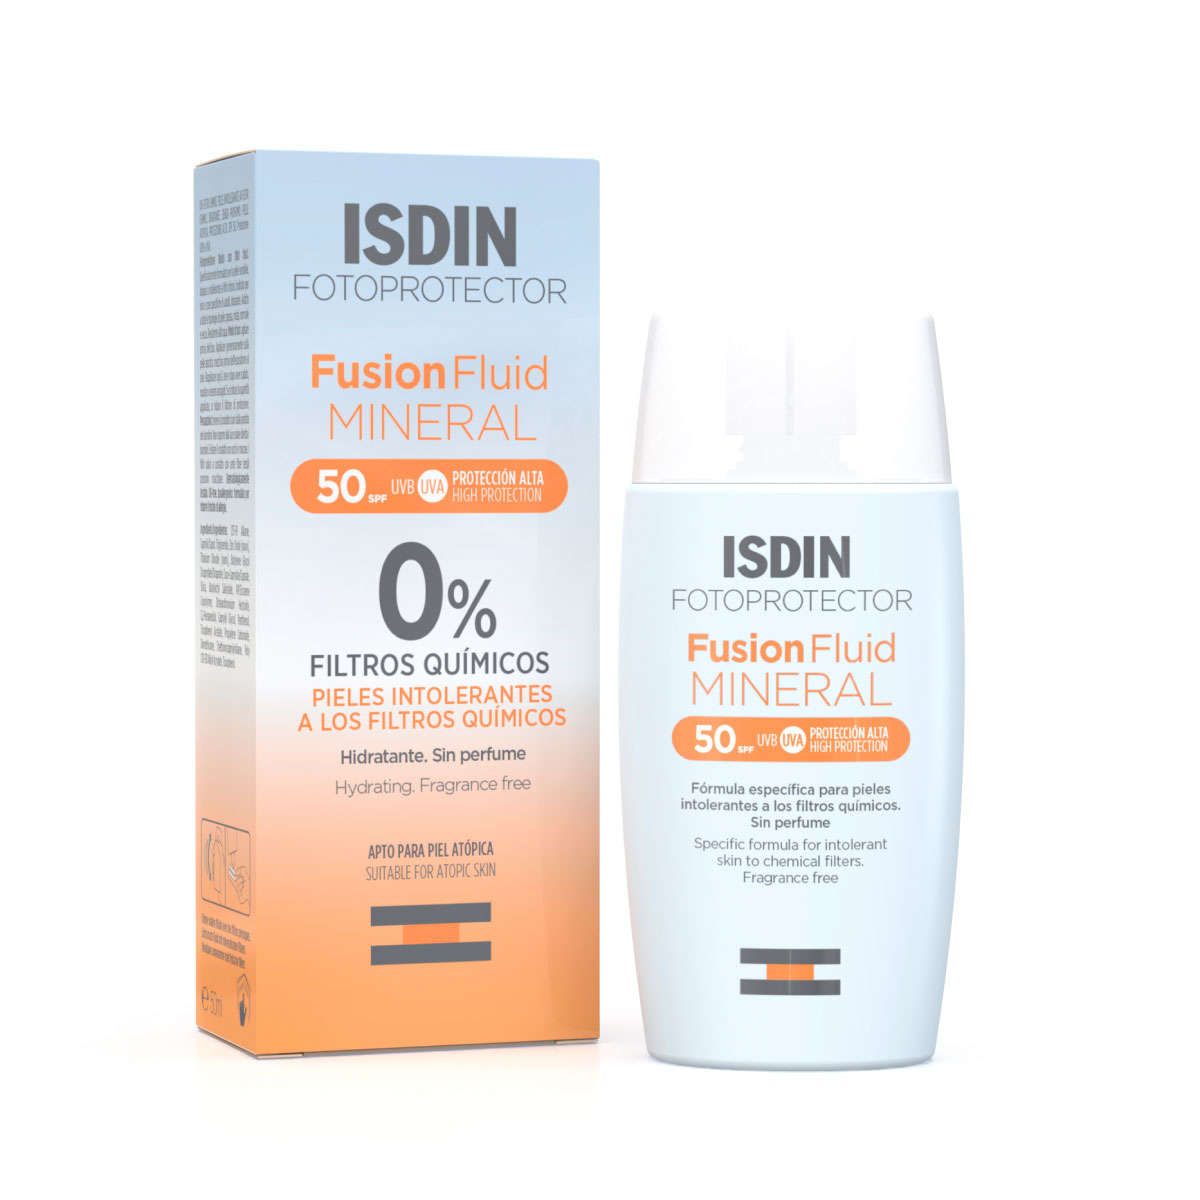  ISDIN Fusion Fluid MINERAL SPF 50+